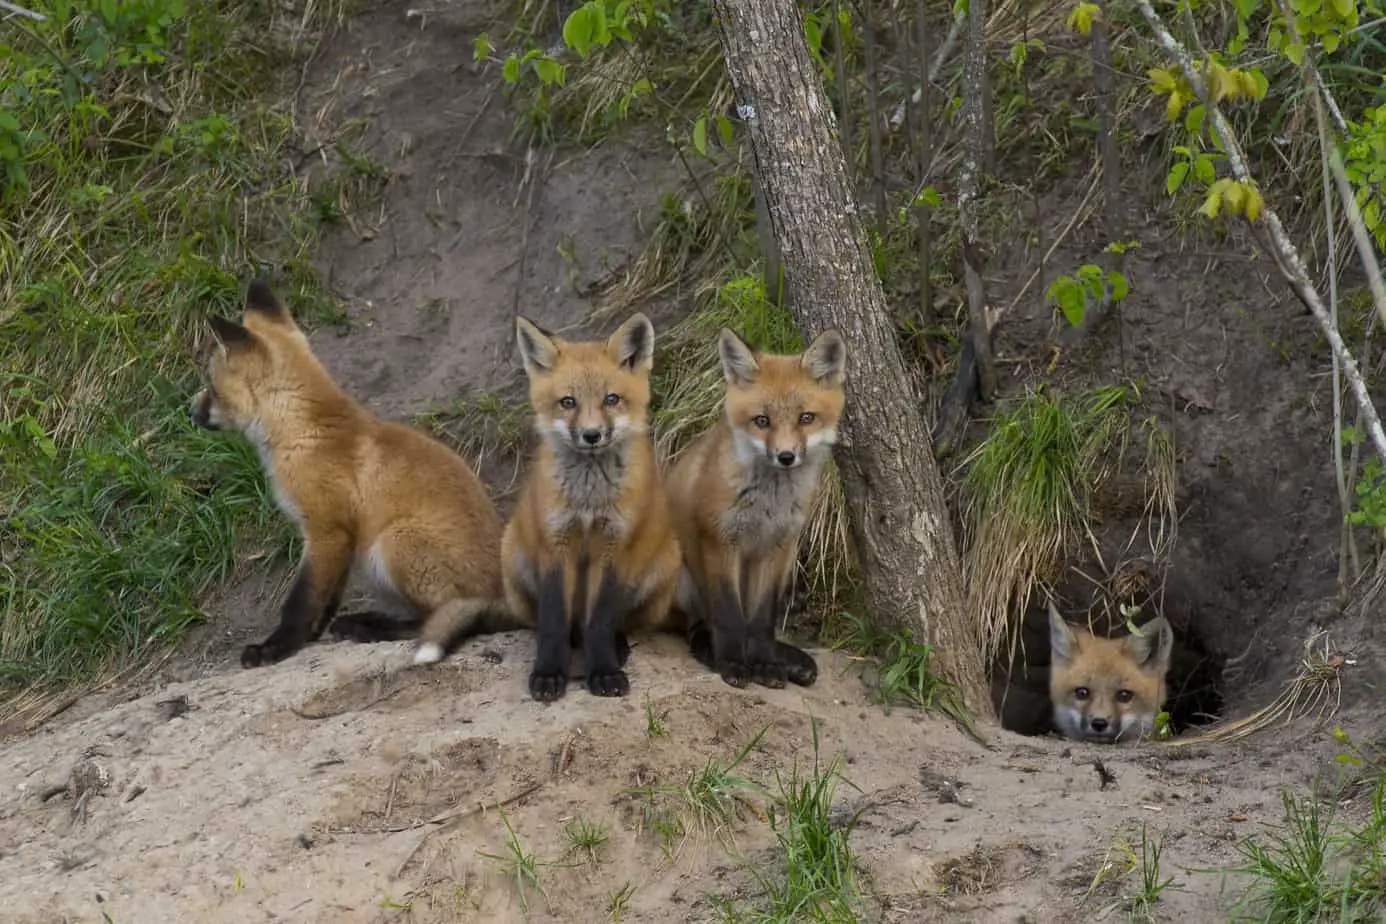 REd fox at their den